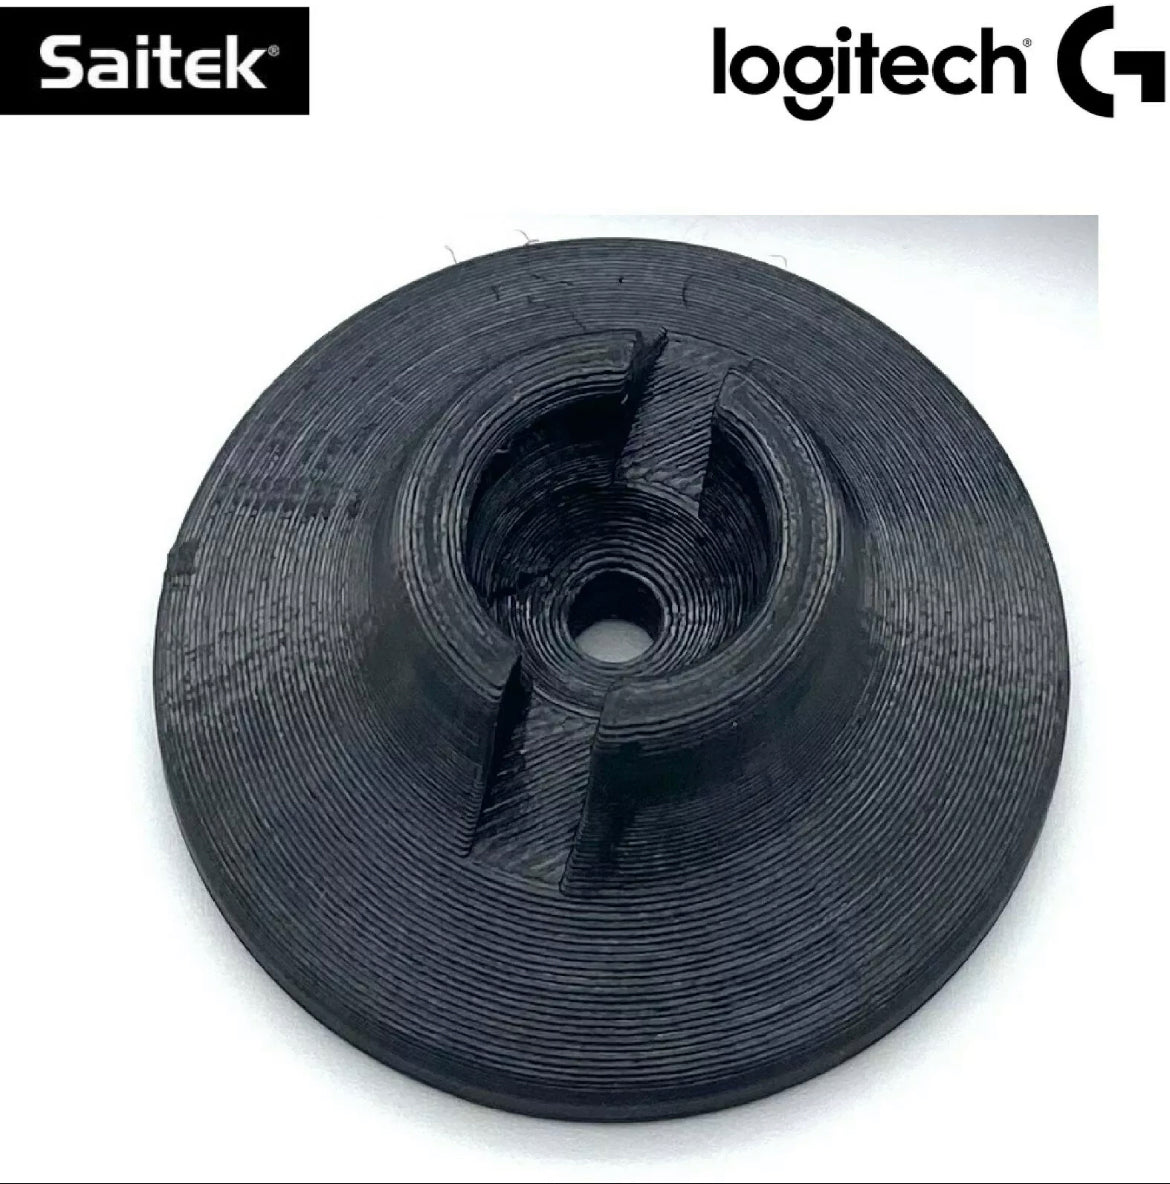 Logitech G / Saitek Pro Flight Yoke Mounting Screw Only